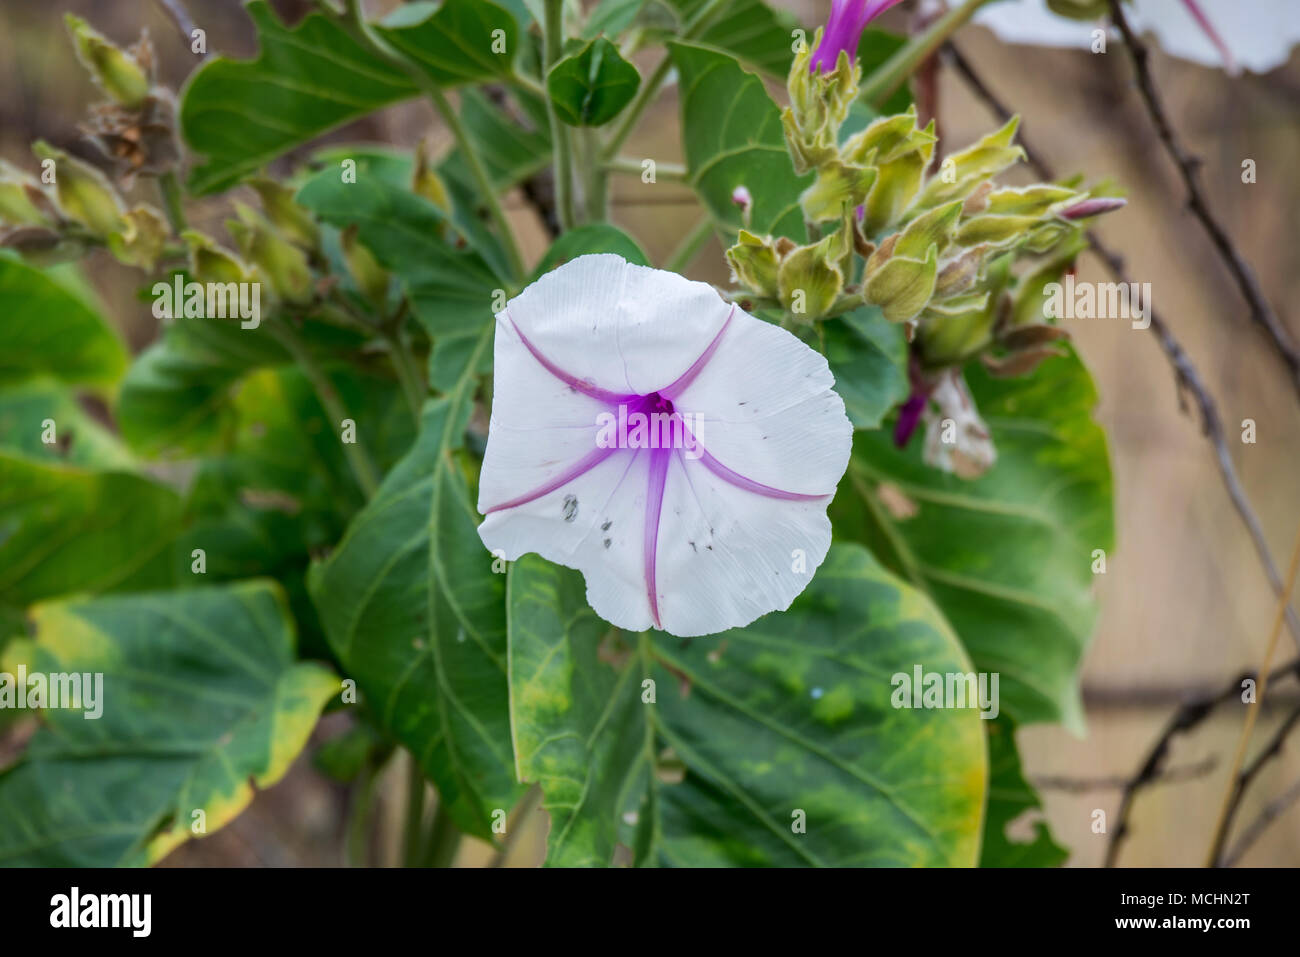 MORNING GLORY BUSH WITH WHITE AND PURPLE FLOWER CLOSE UP, TARANGIRE NATIONAL PARK, TANZANIA Stock Photo